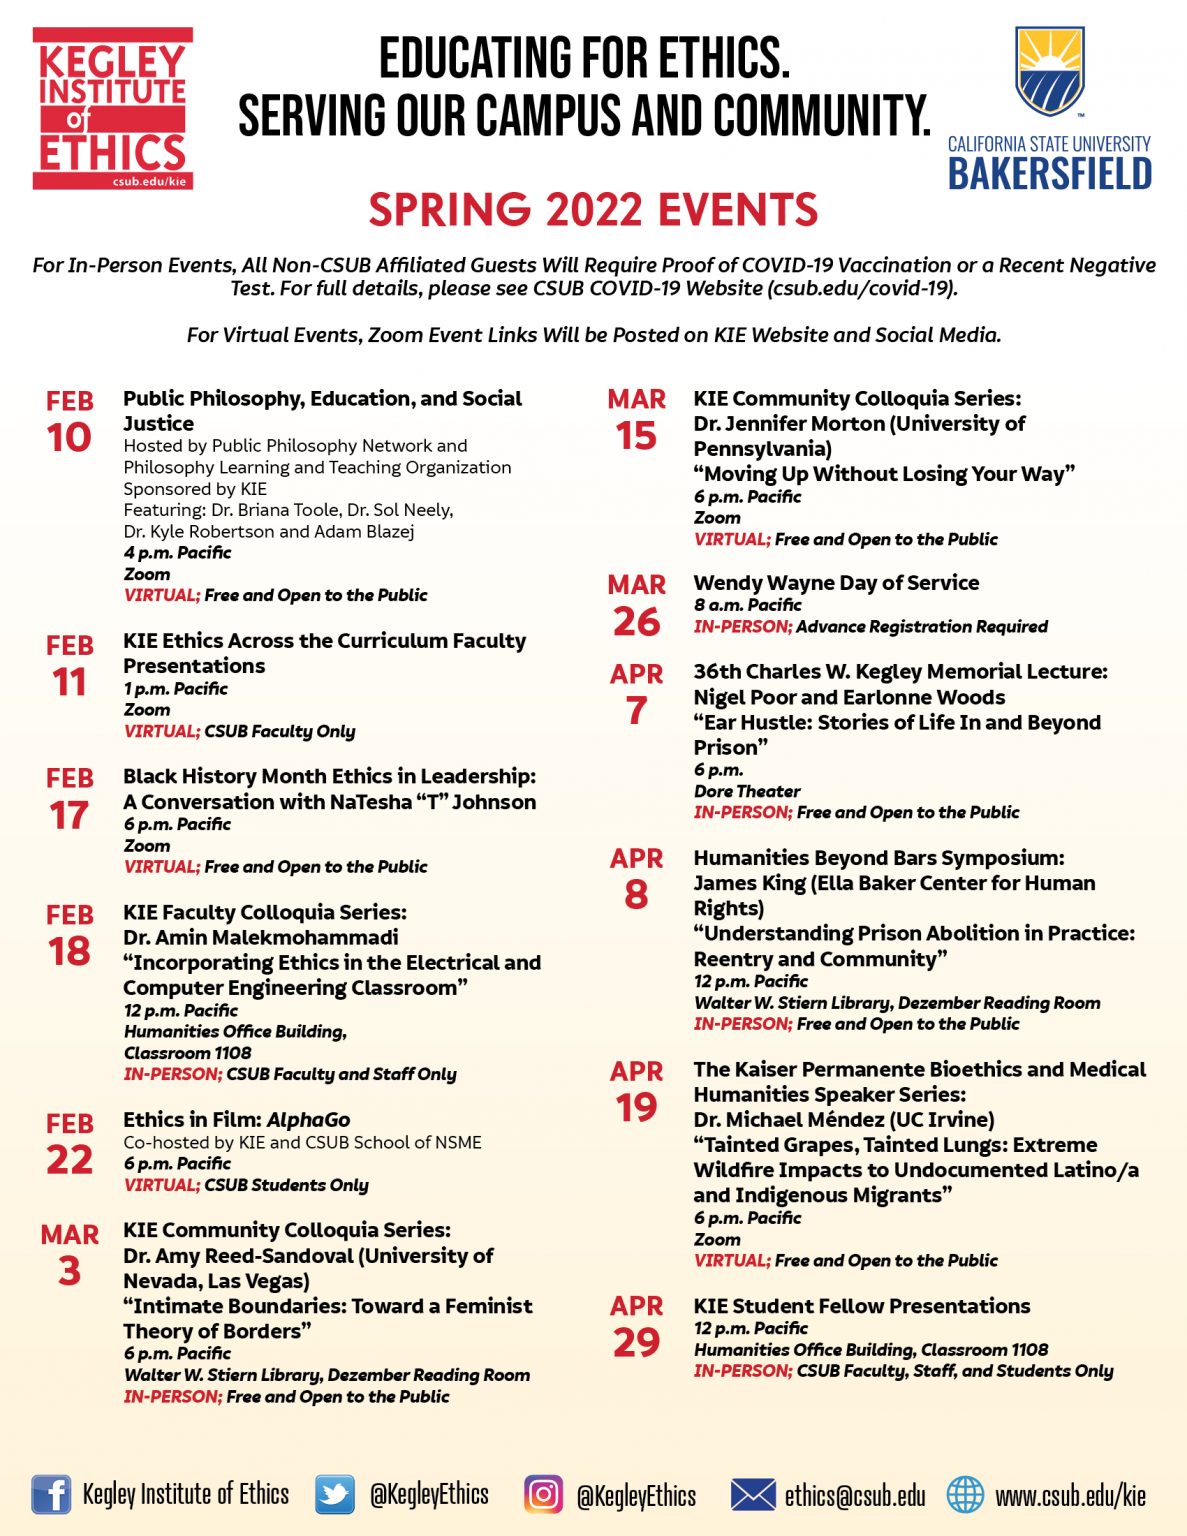 KIE Spring 2022 Event Calendar is Published Kegley Institute of Ethics